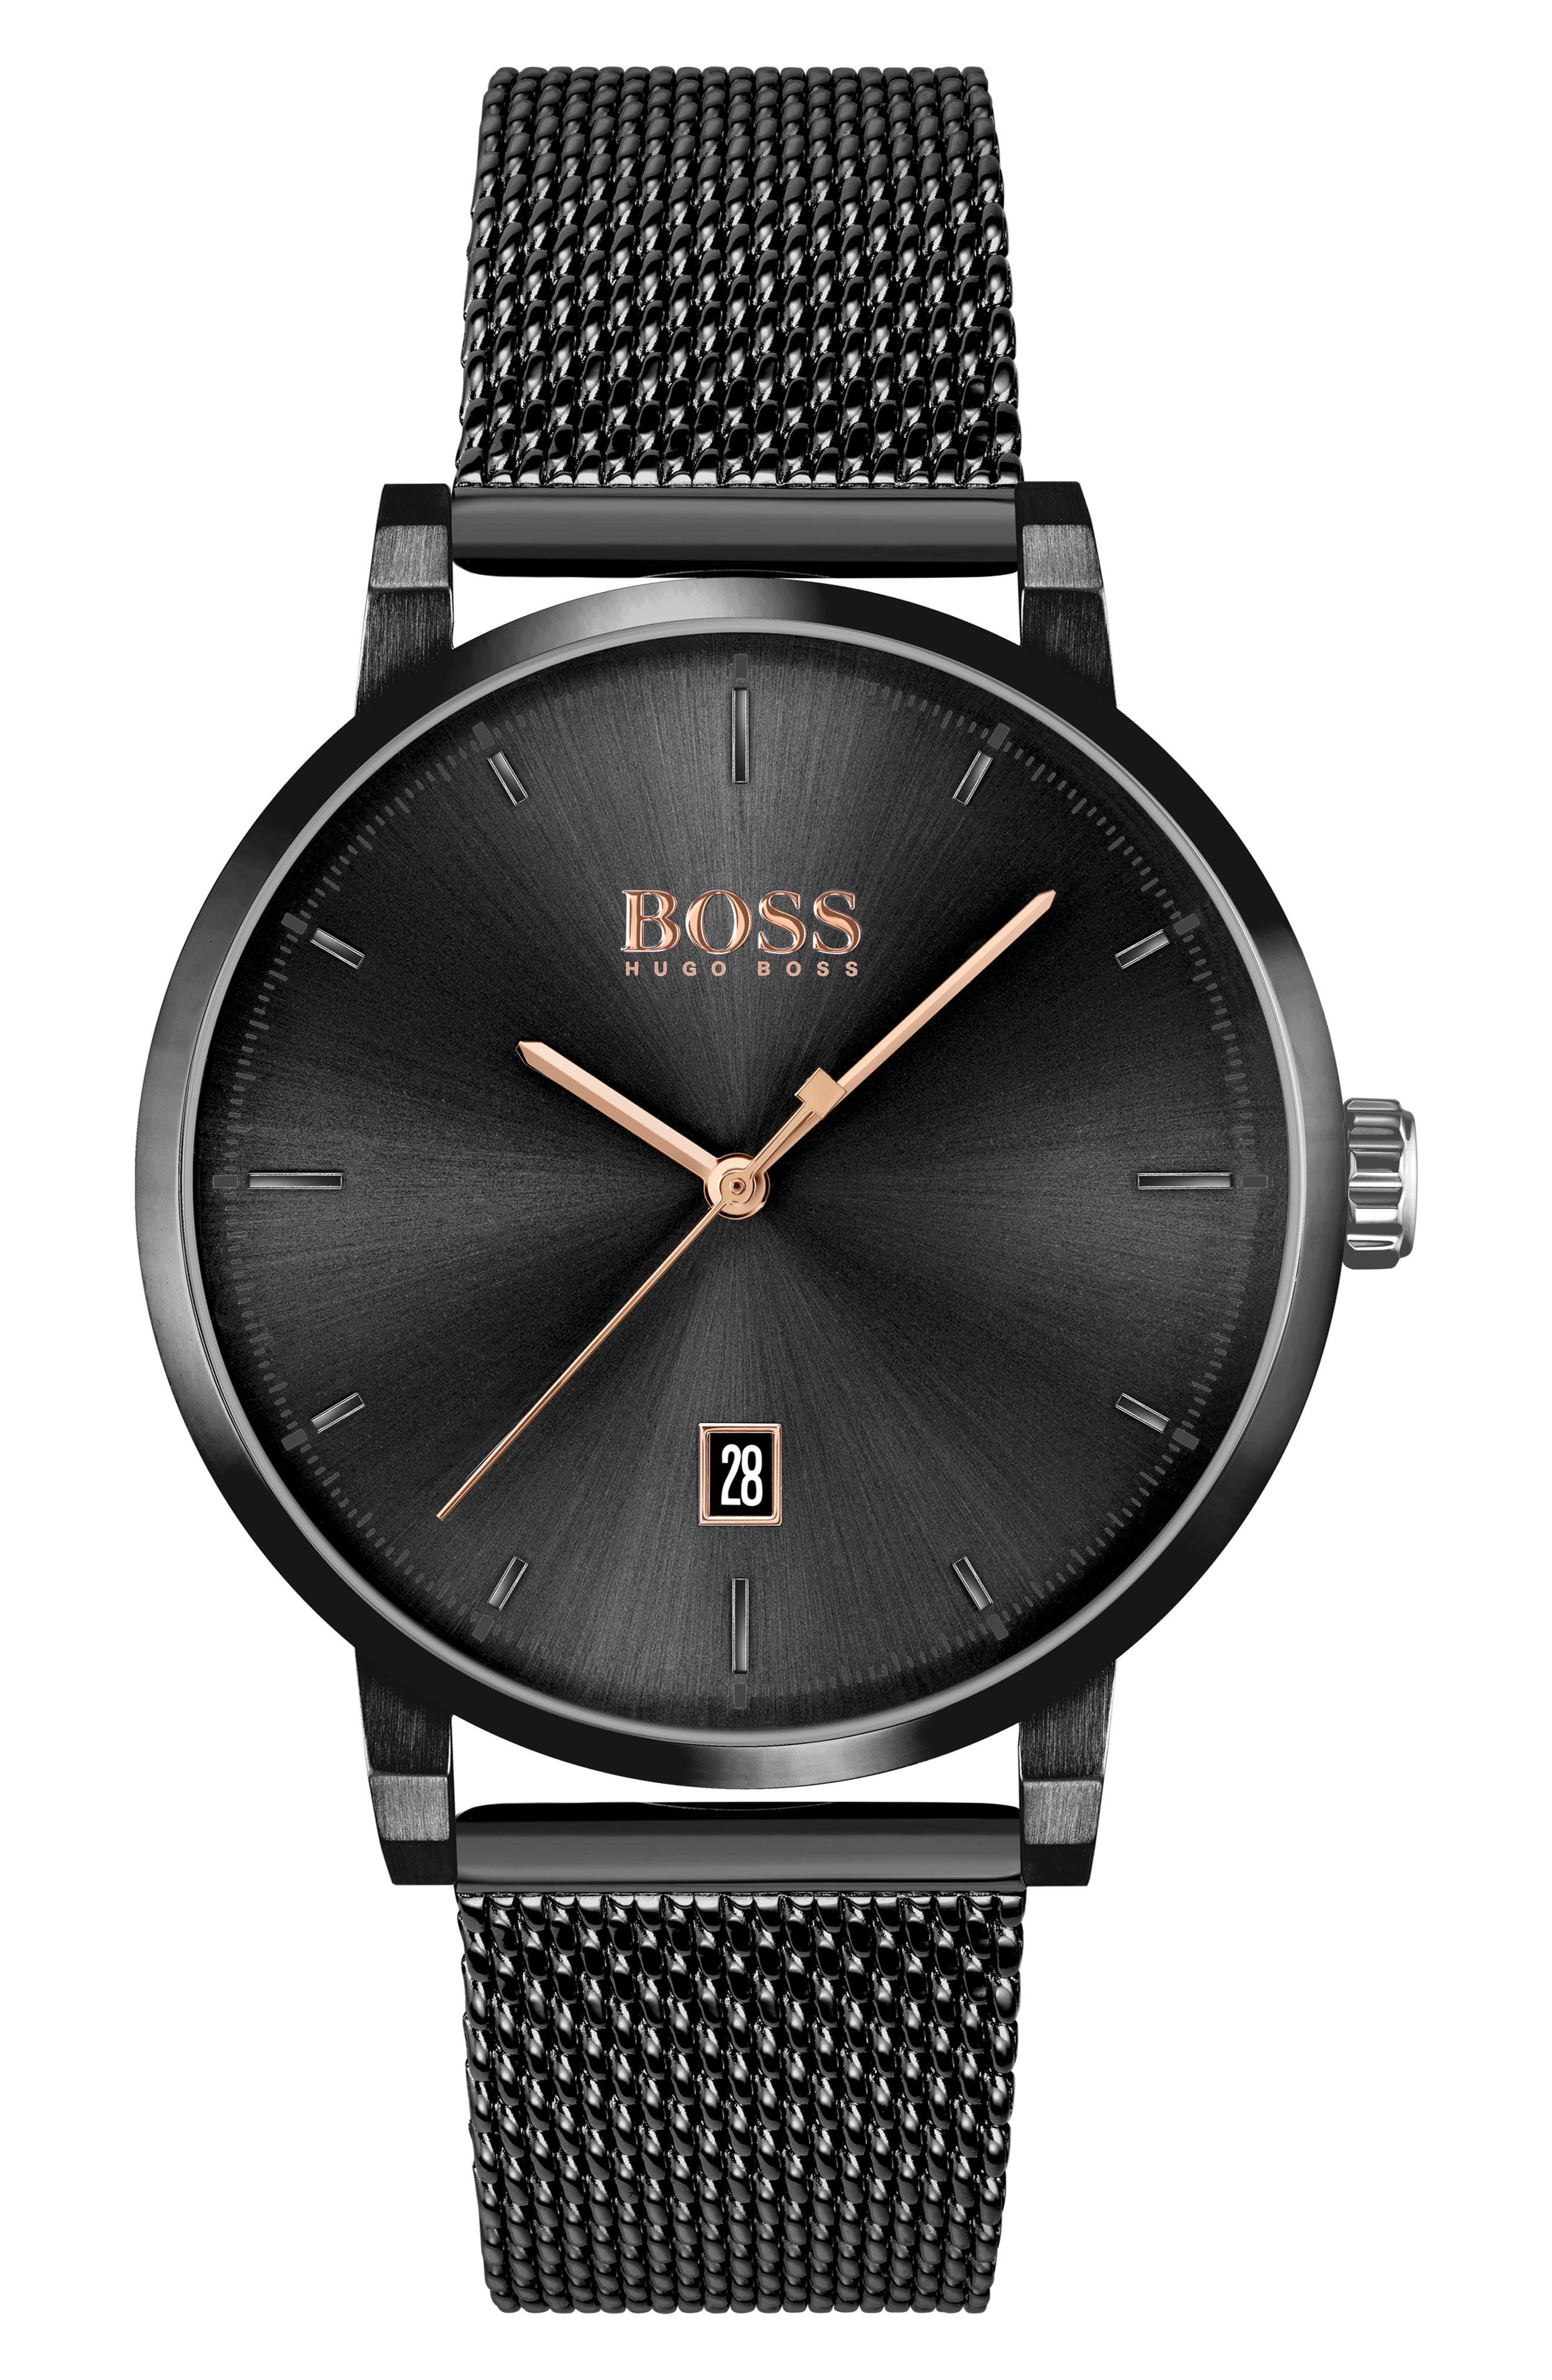 hugo boss women's watches prices